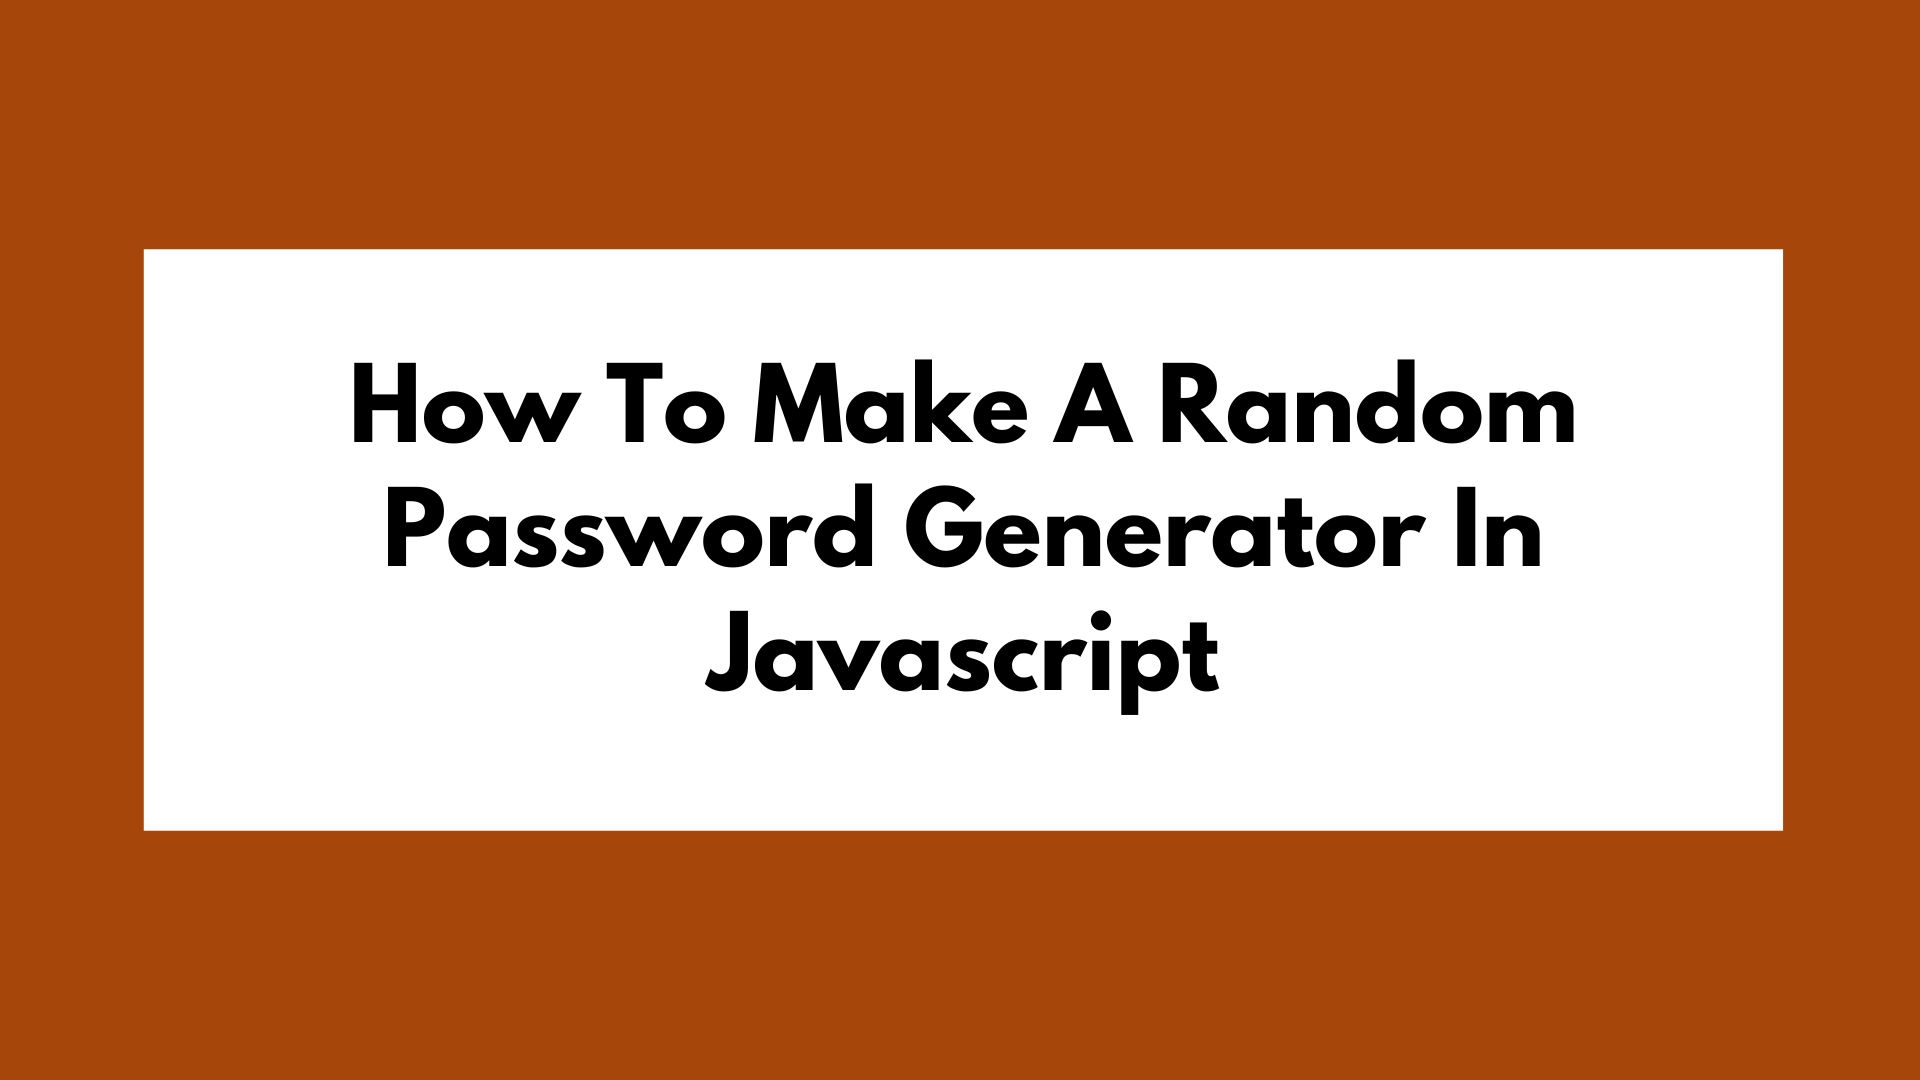 How To Make A Random Password Generator In Javascript